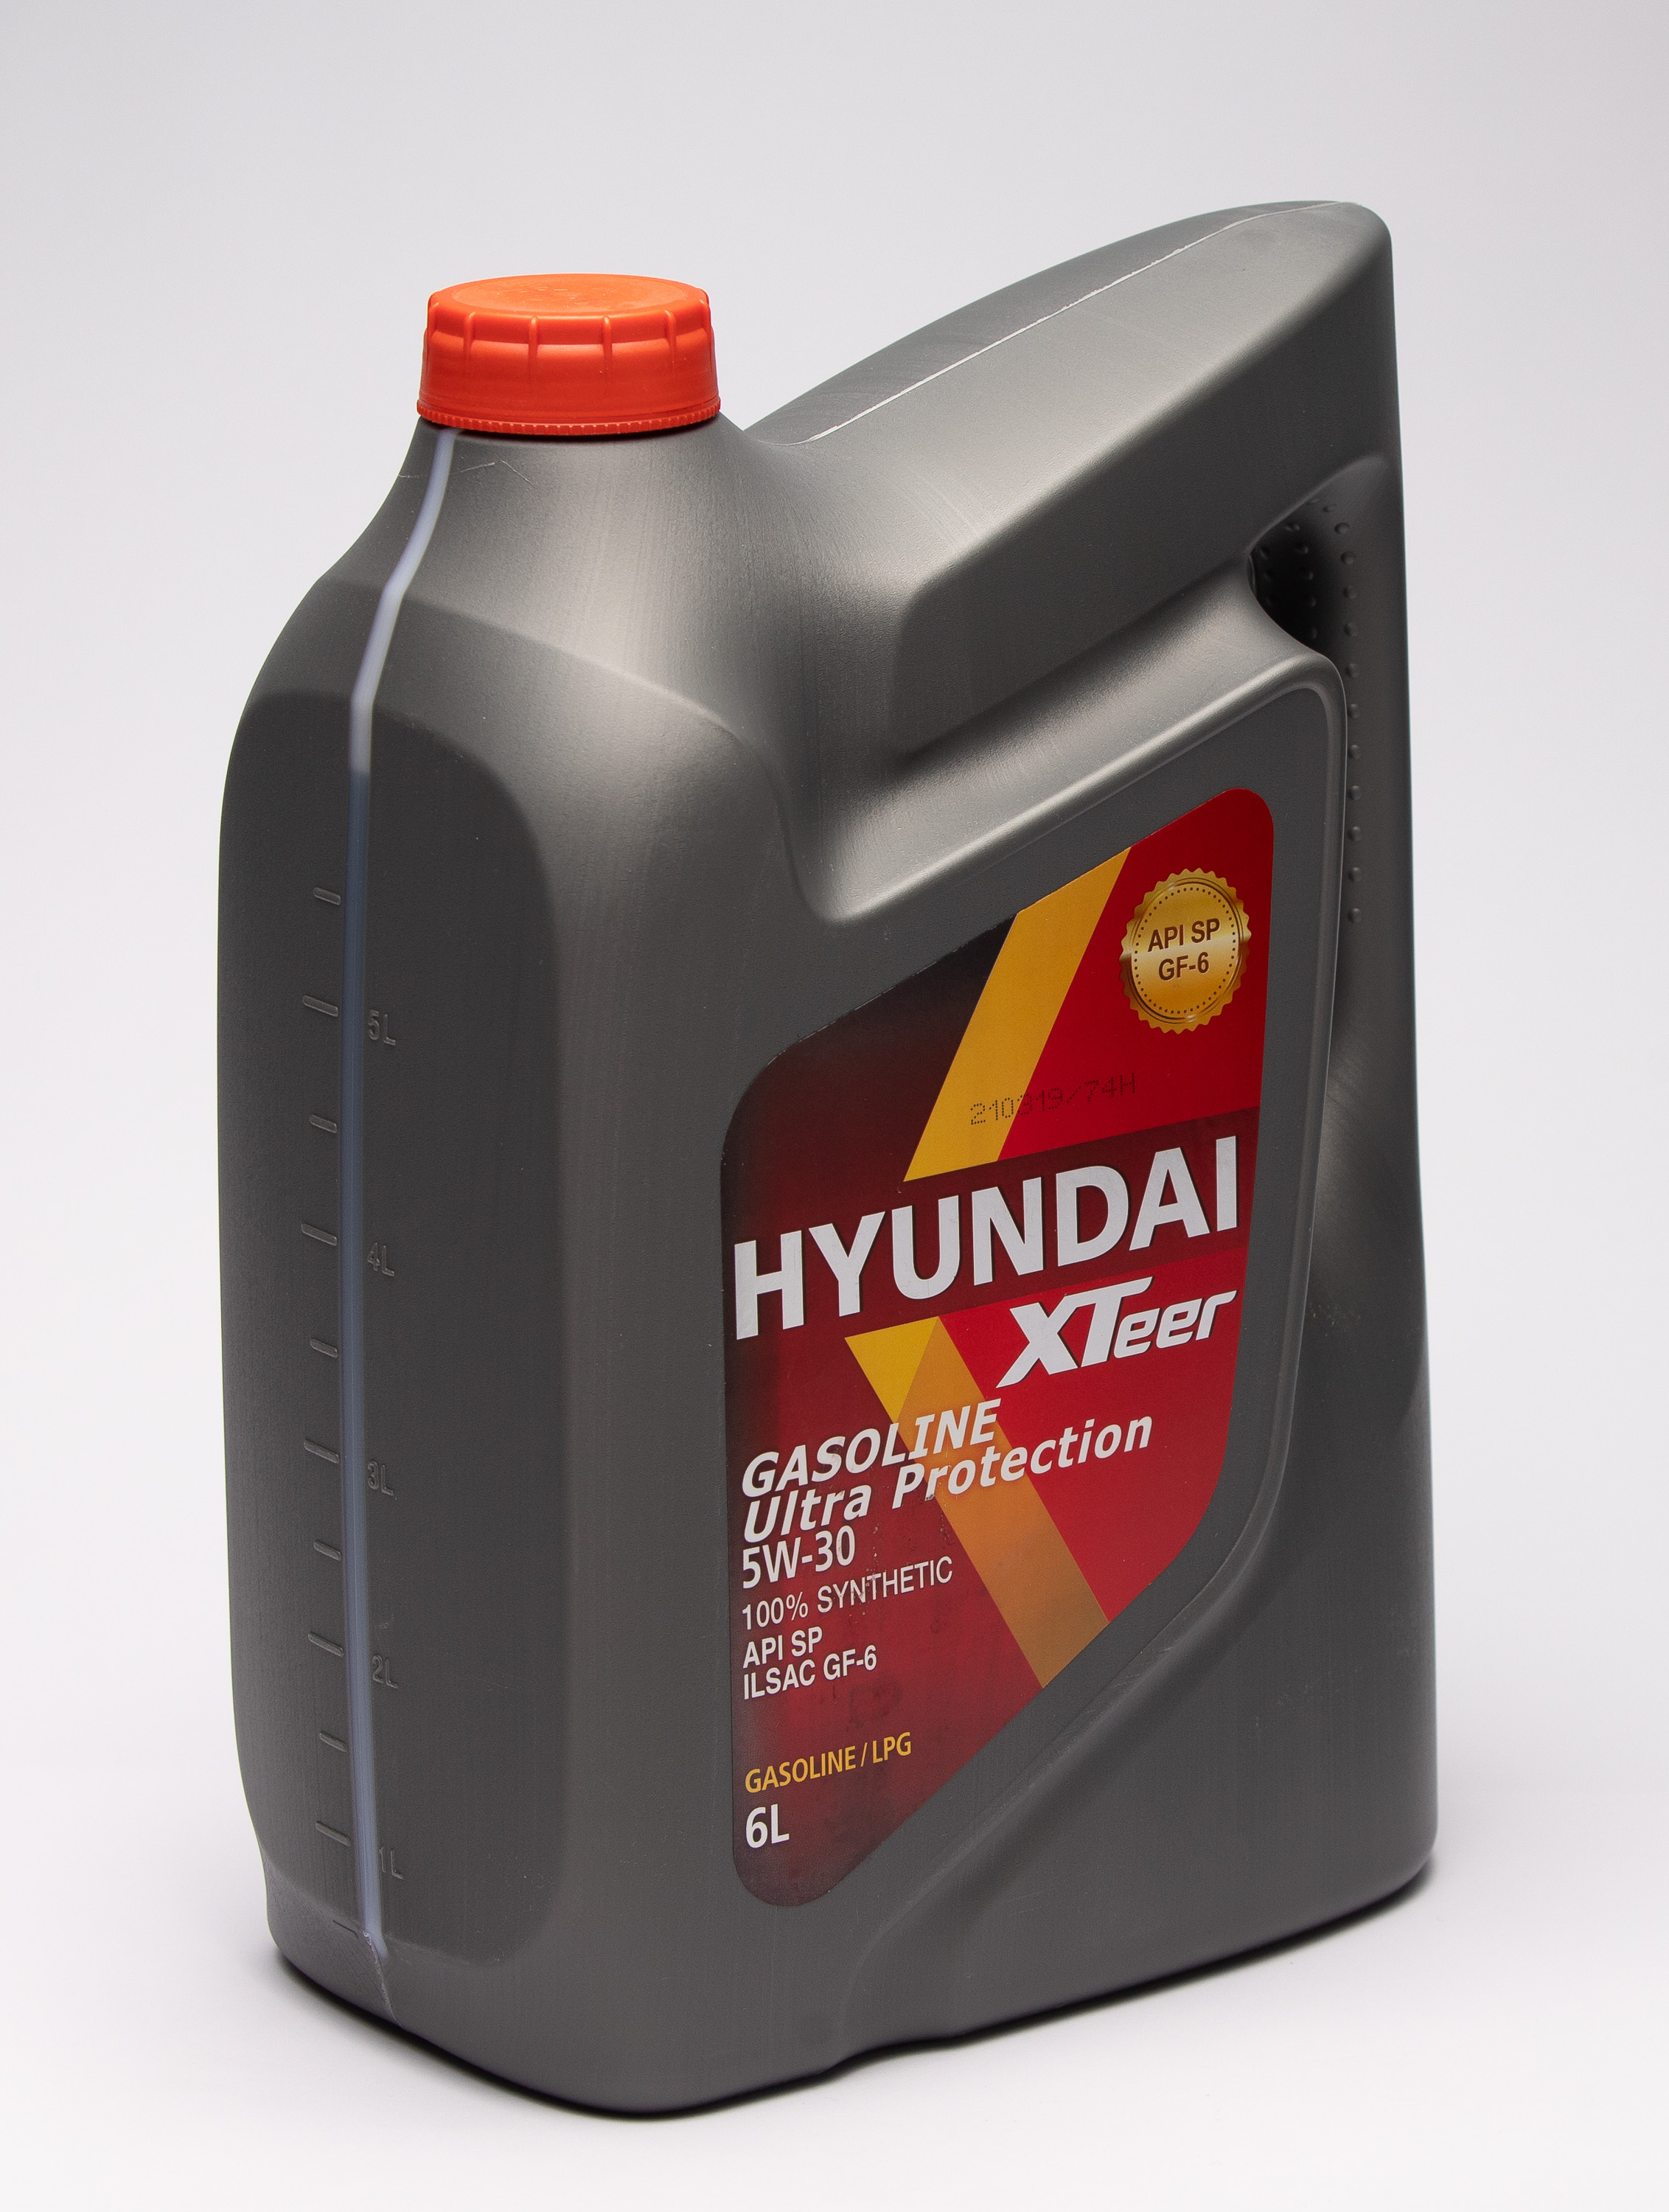 Hyundai XTEER gasoline g700 5w-30. Hyundai XTEER 5w30 4л. Hyundai масло XTEER g700. XTEER g700 5w30.